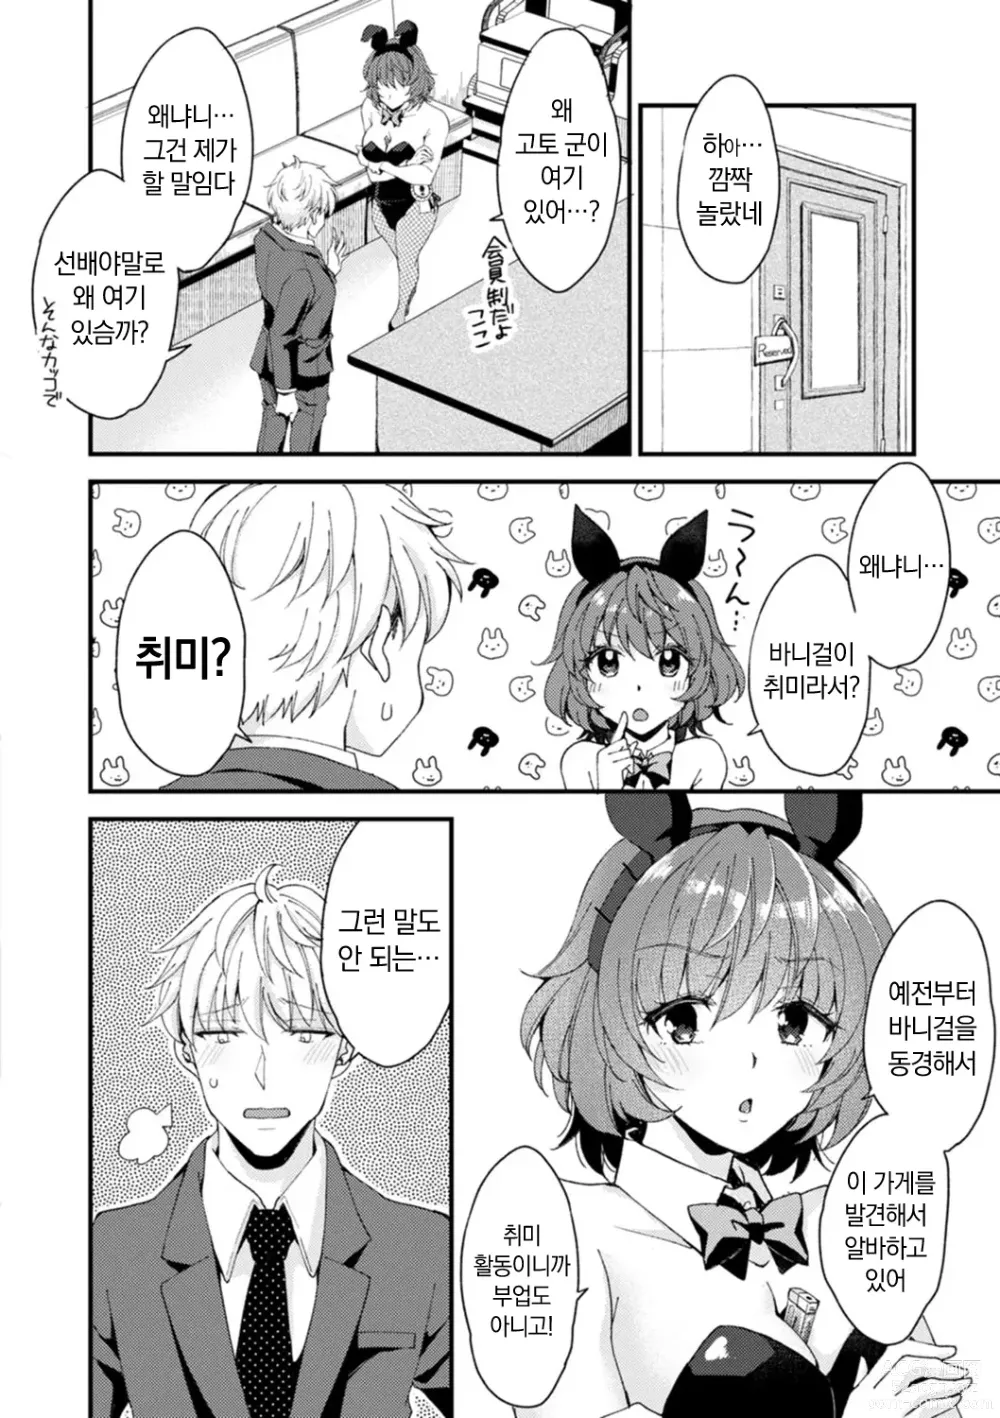 Page 10 of manga 취미가 바니걸이라니 정말이에요?